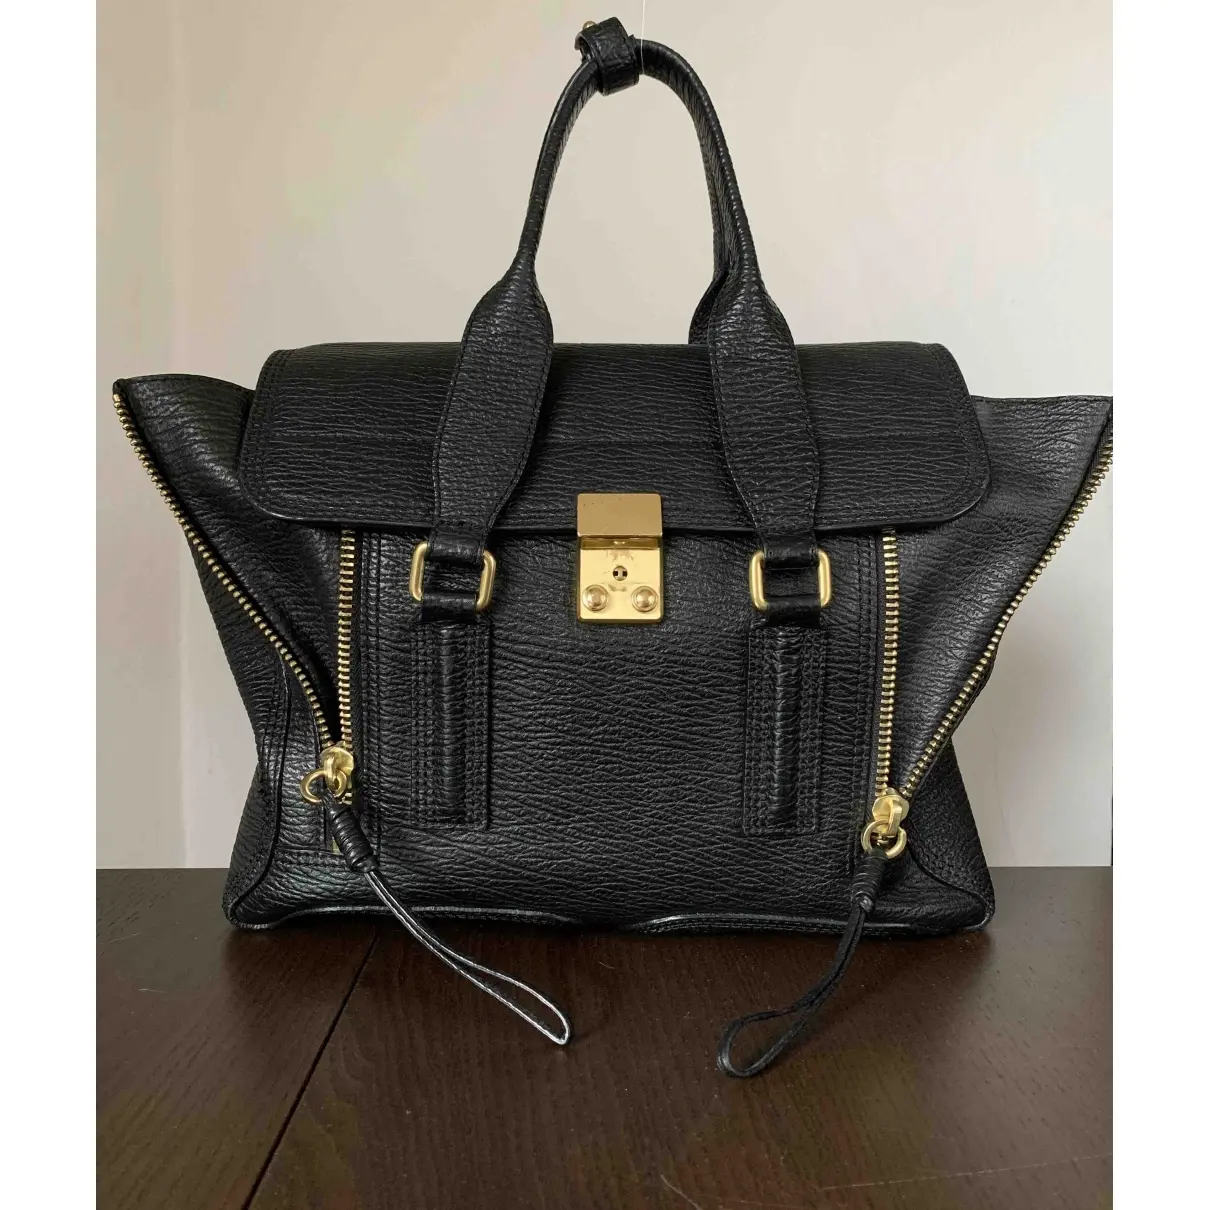 Buy 3.1 Phillip Lim Pashli leather handbag online